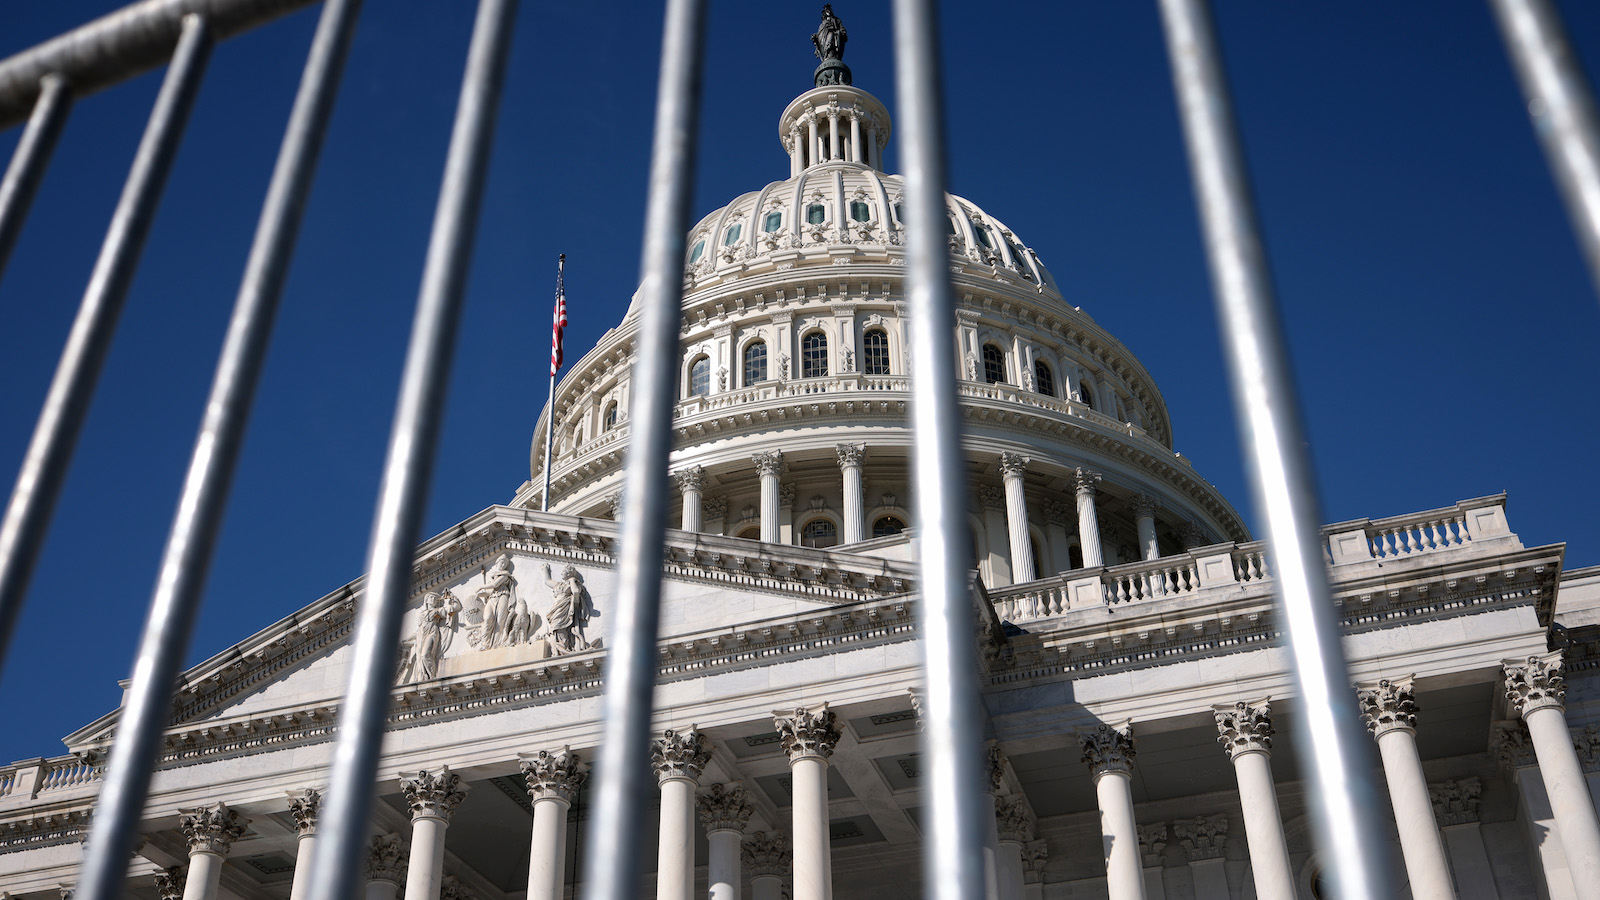 Capitol building through a fence